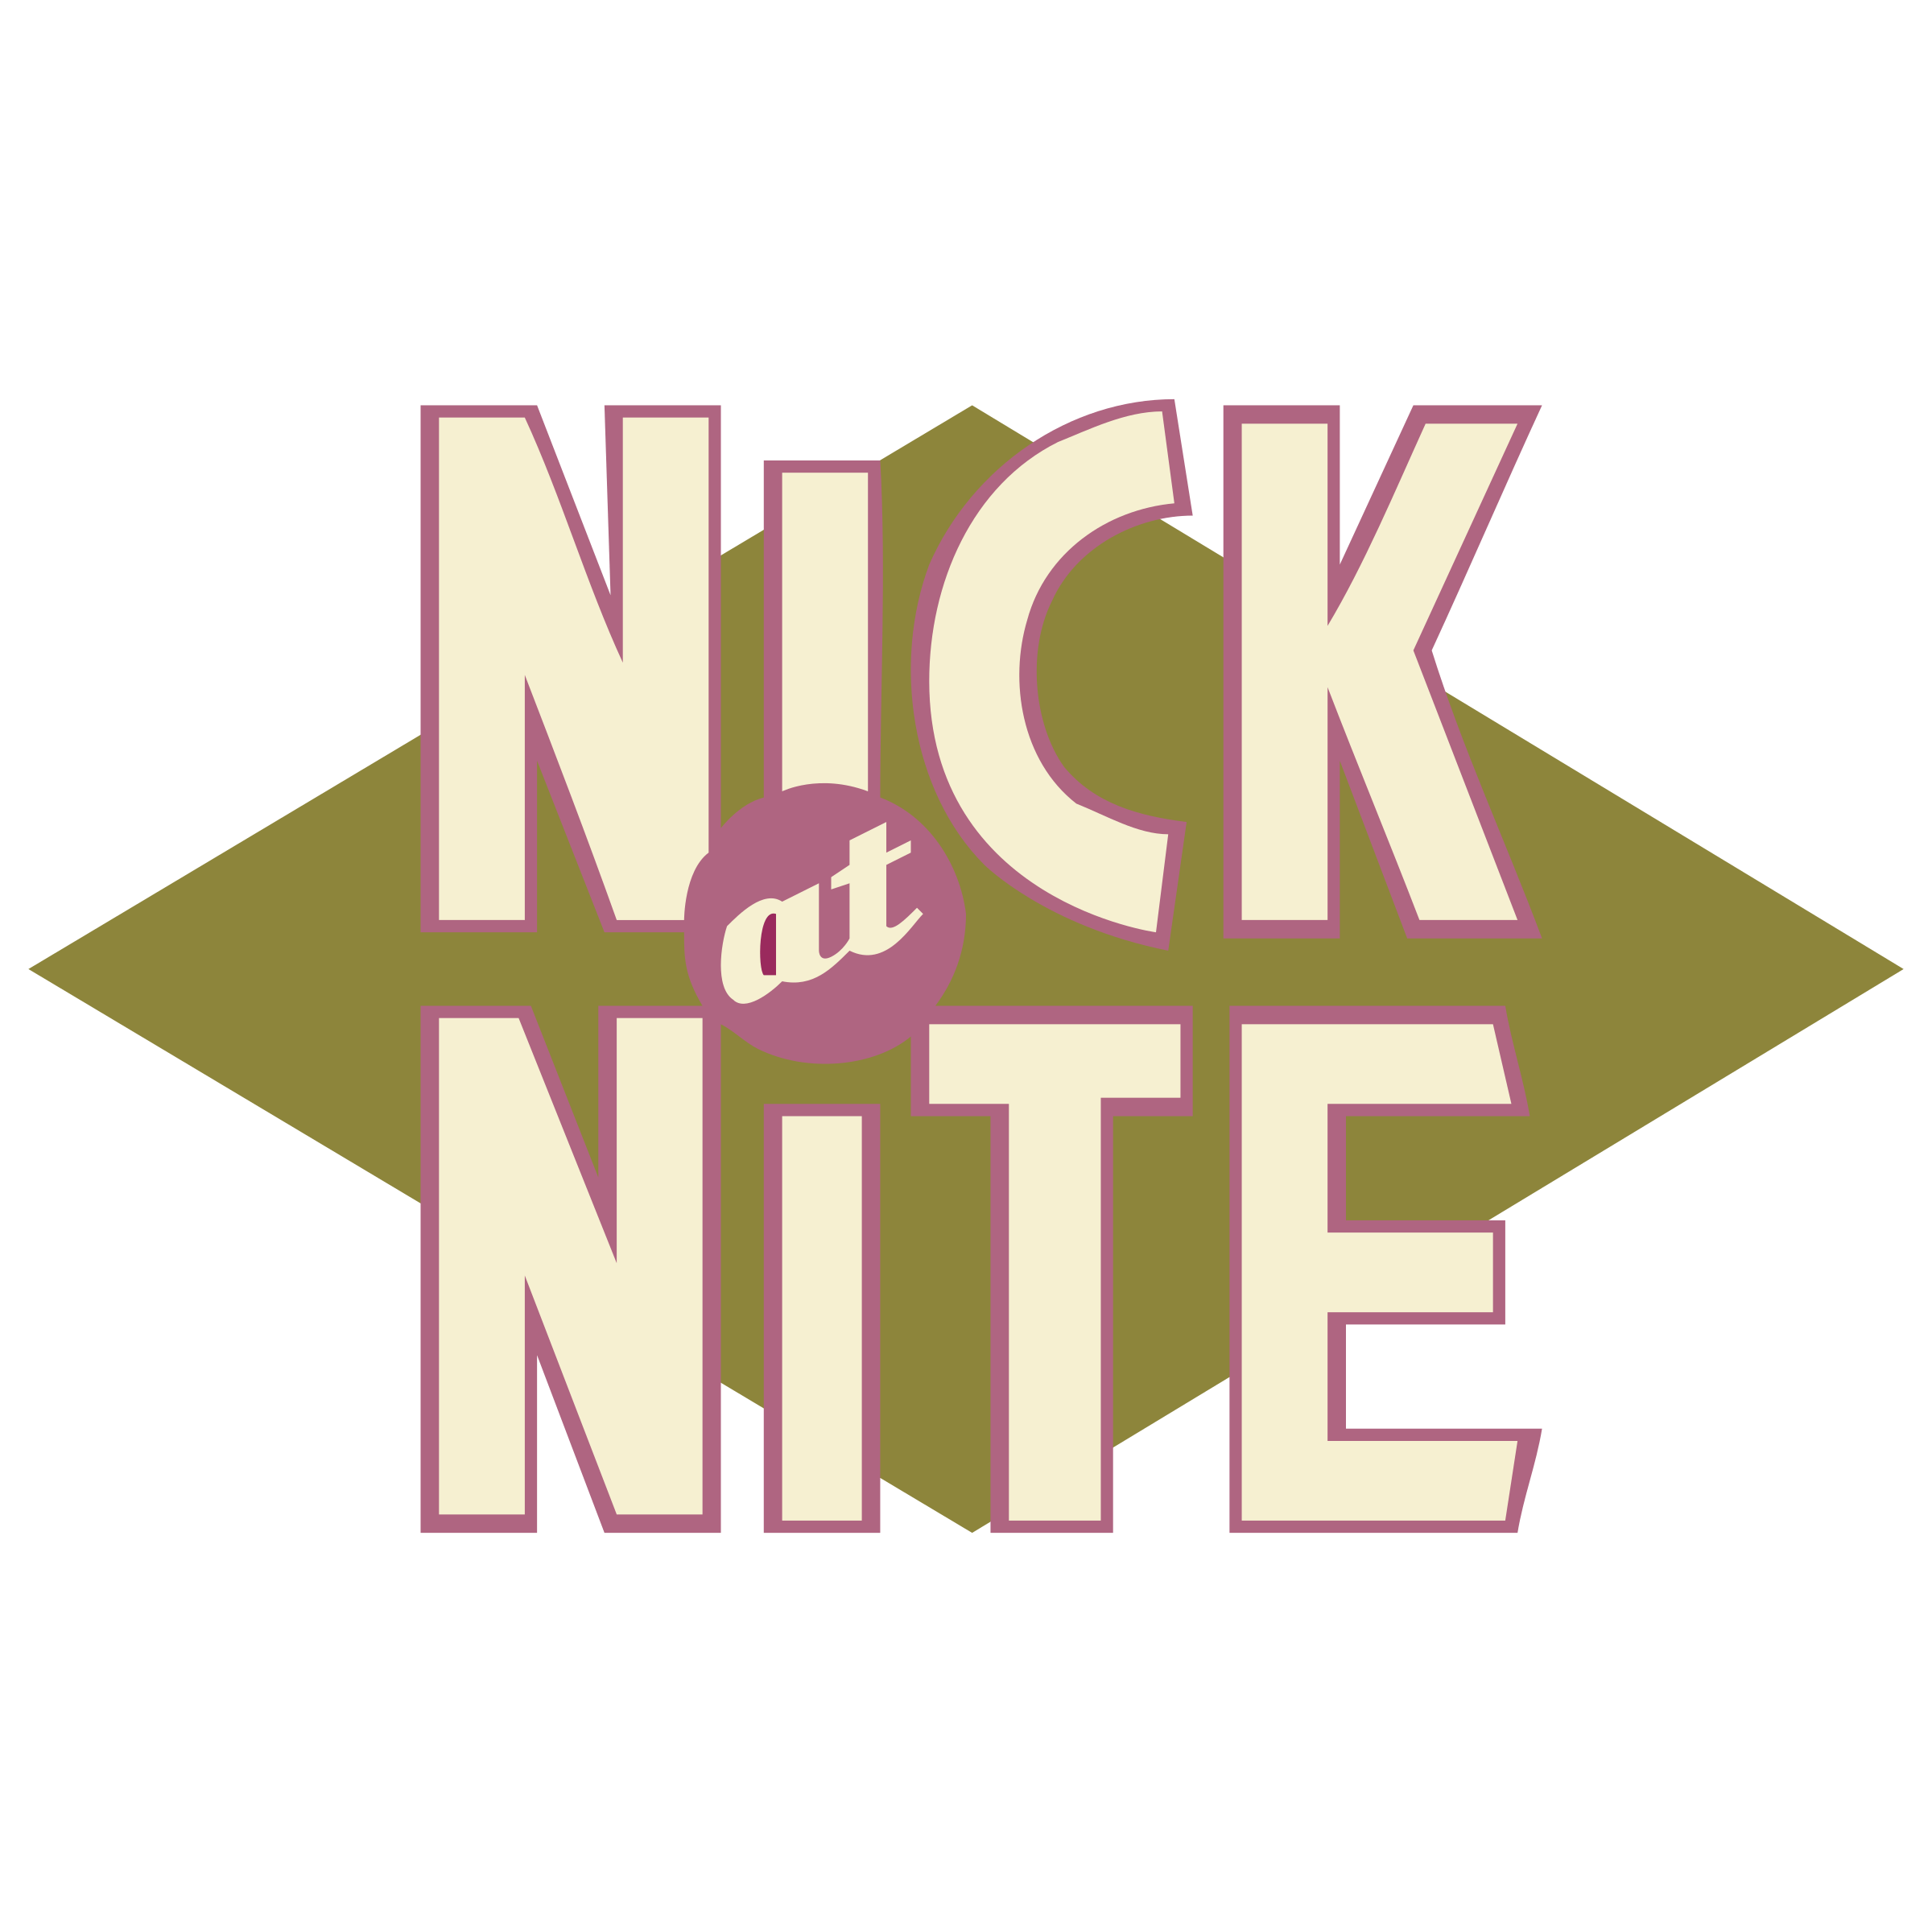 Nick 2 Logo - Nick at Nite Logo PNG Transparent & SVG Vector - Freebie Supply